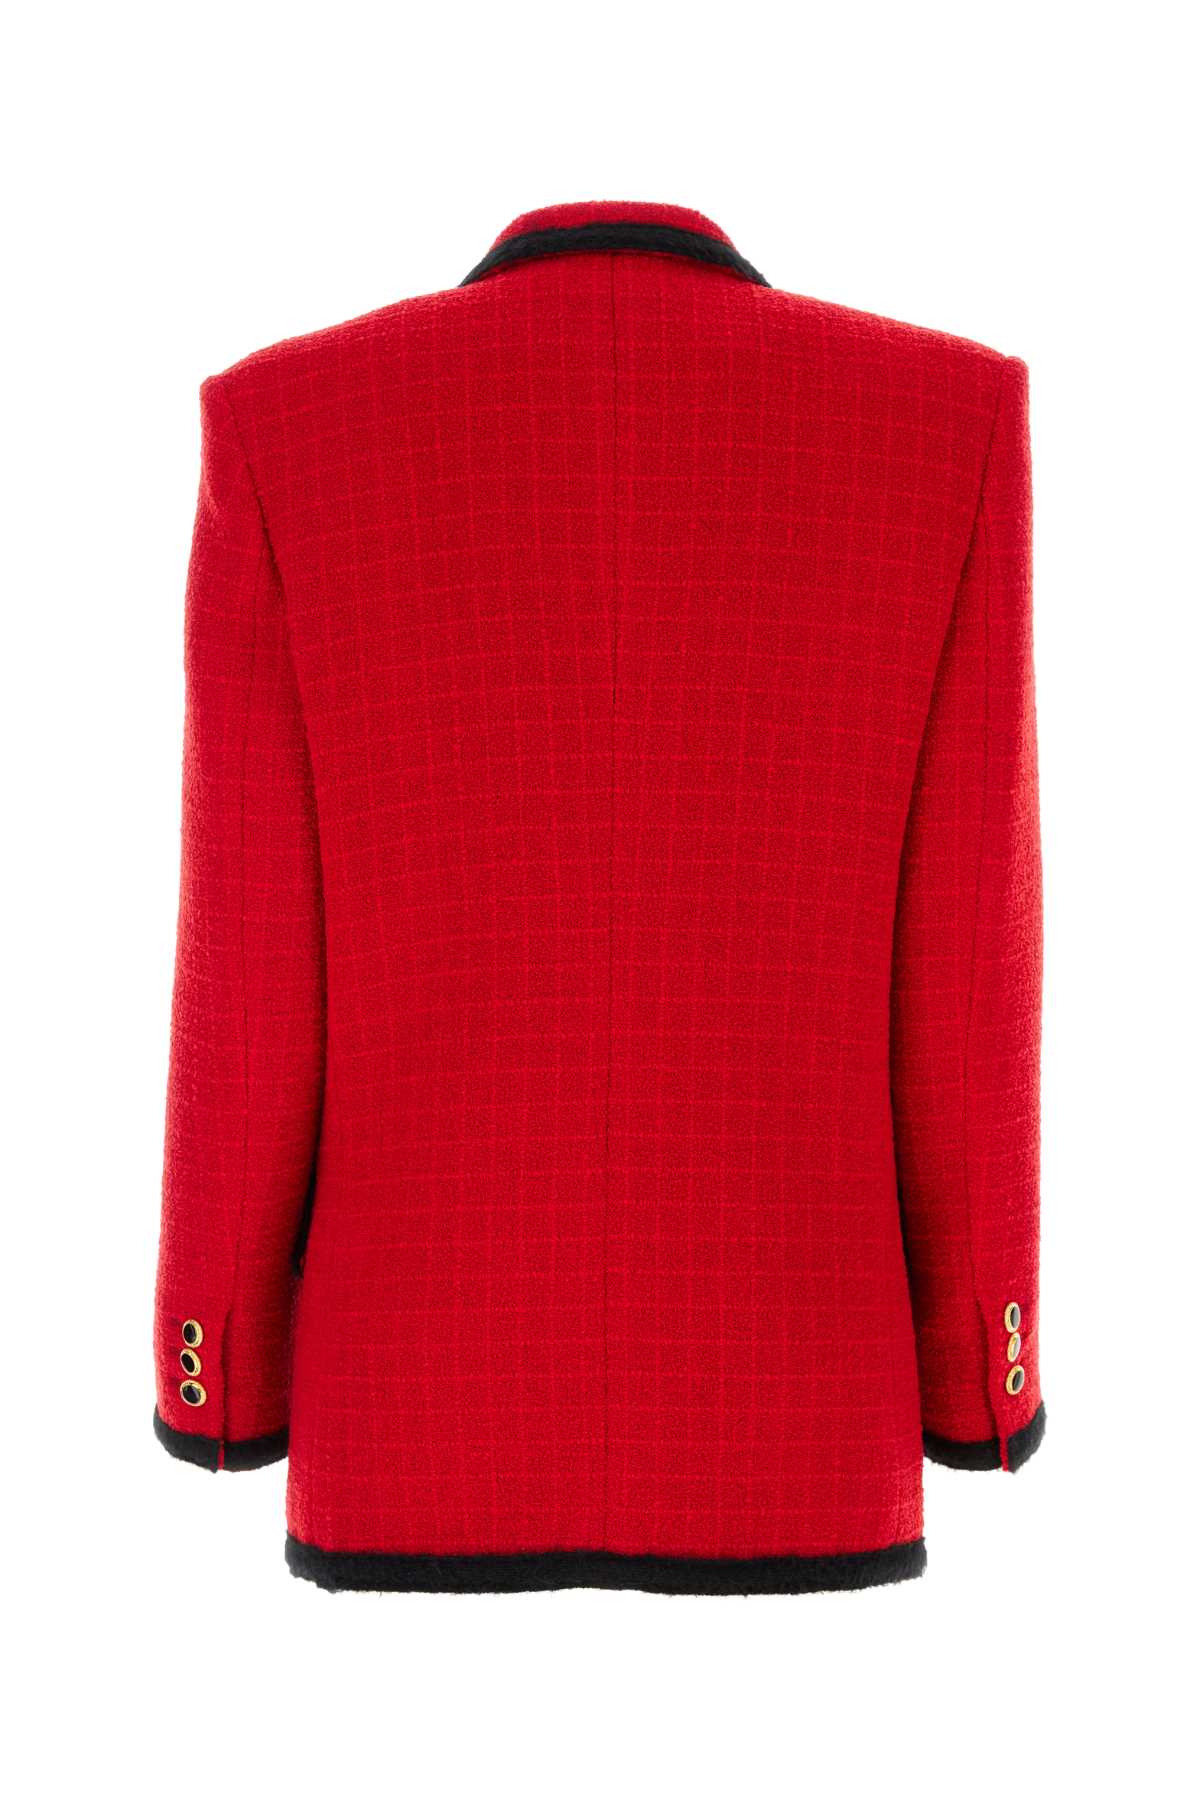 Alessandra Rich Red Tweed Jacket